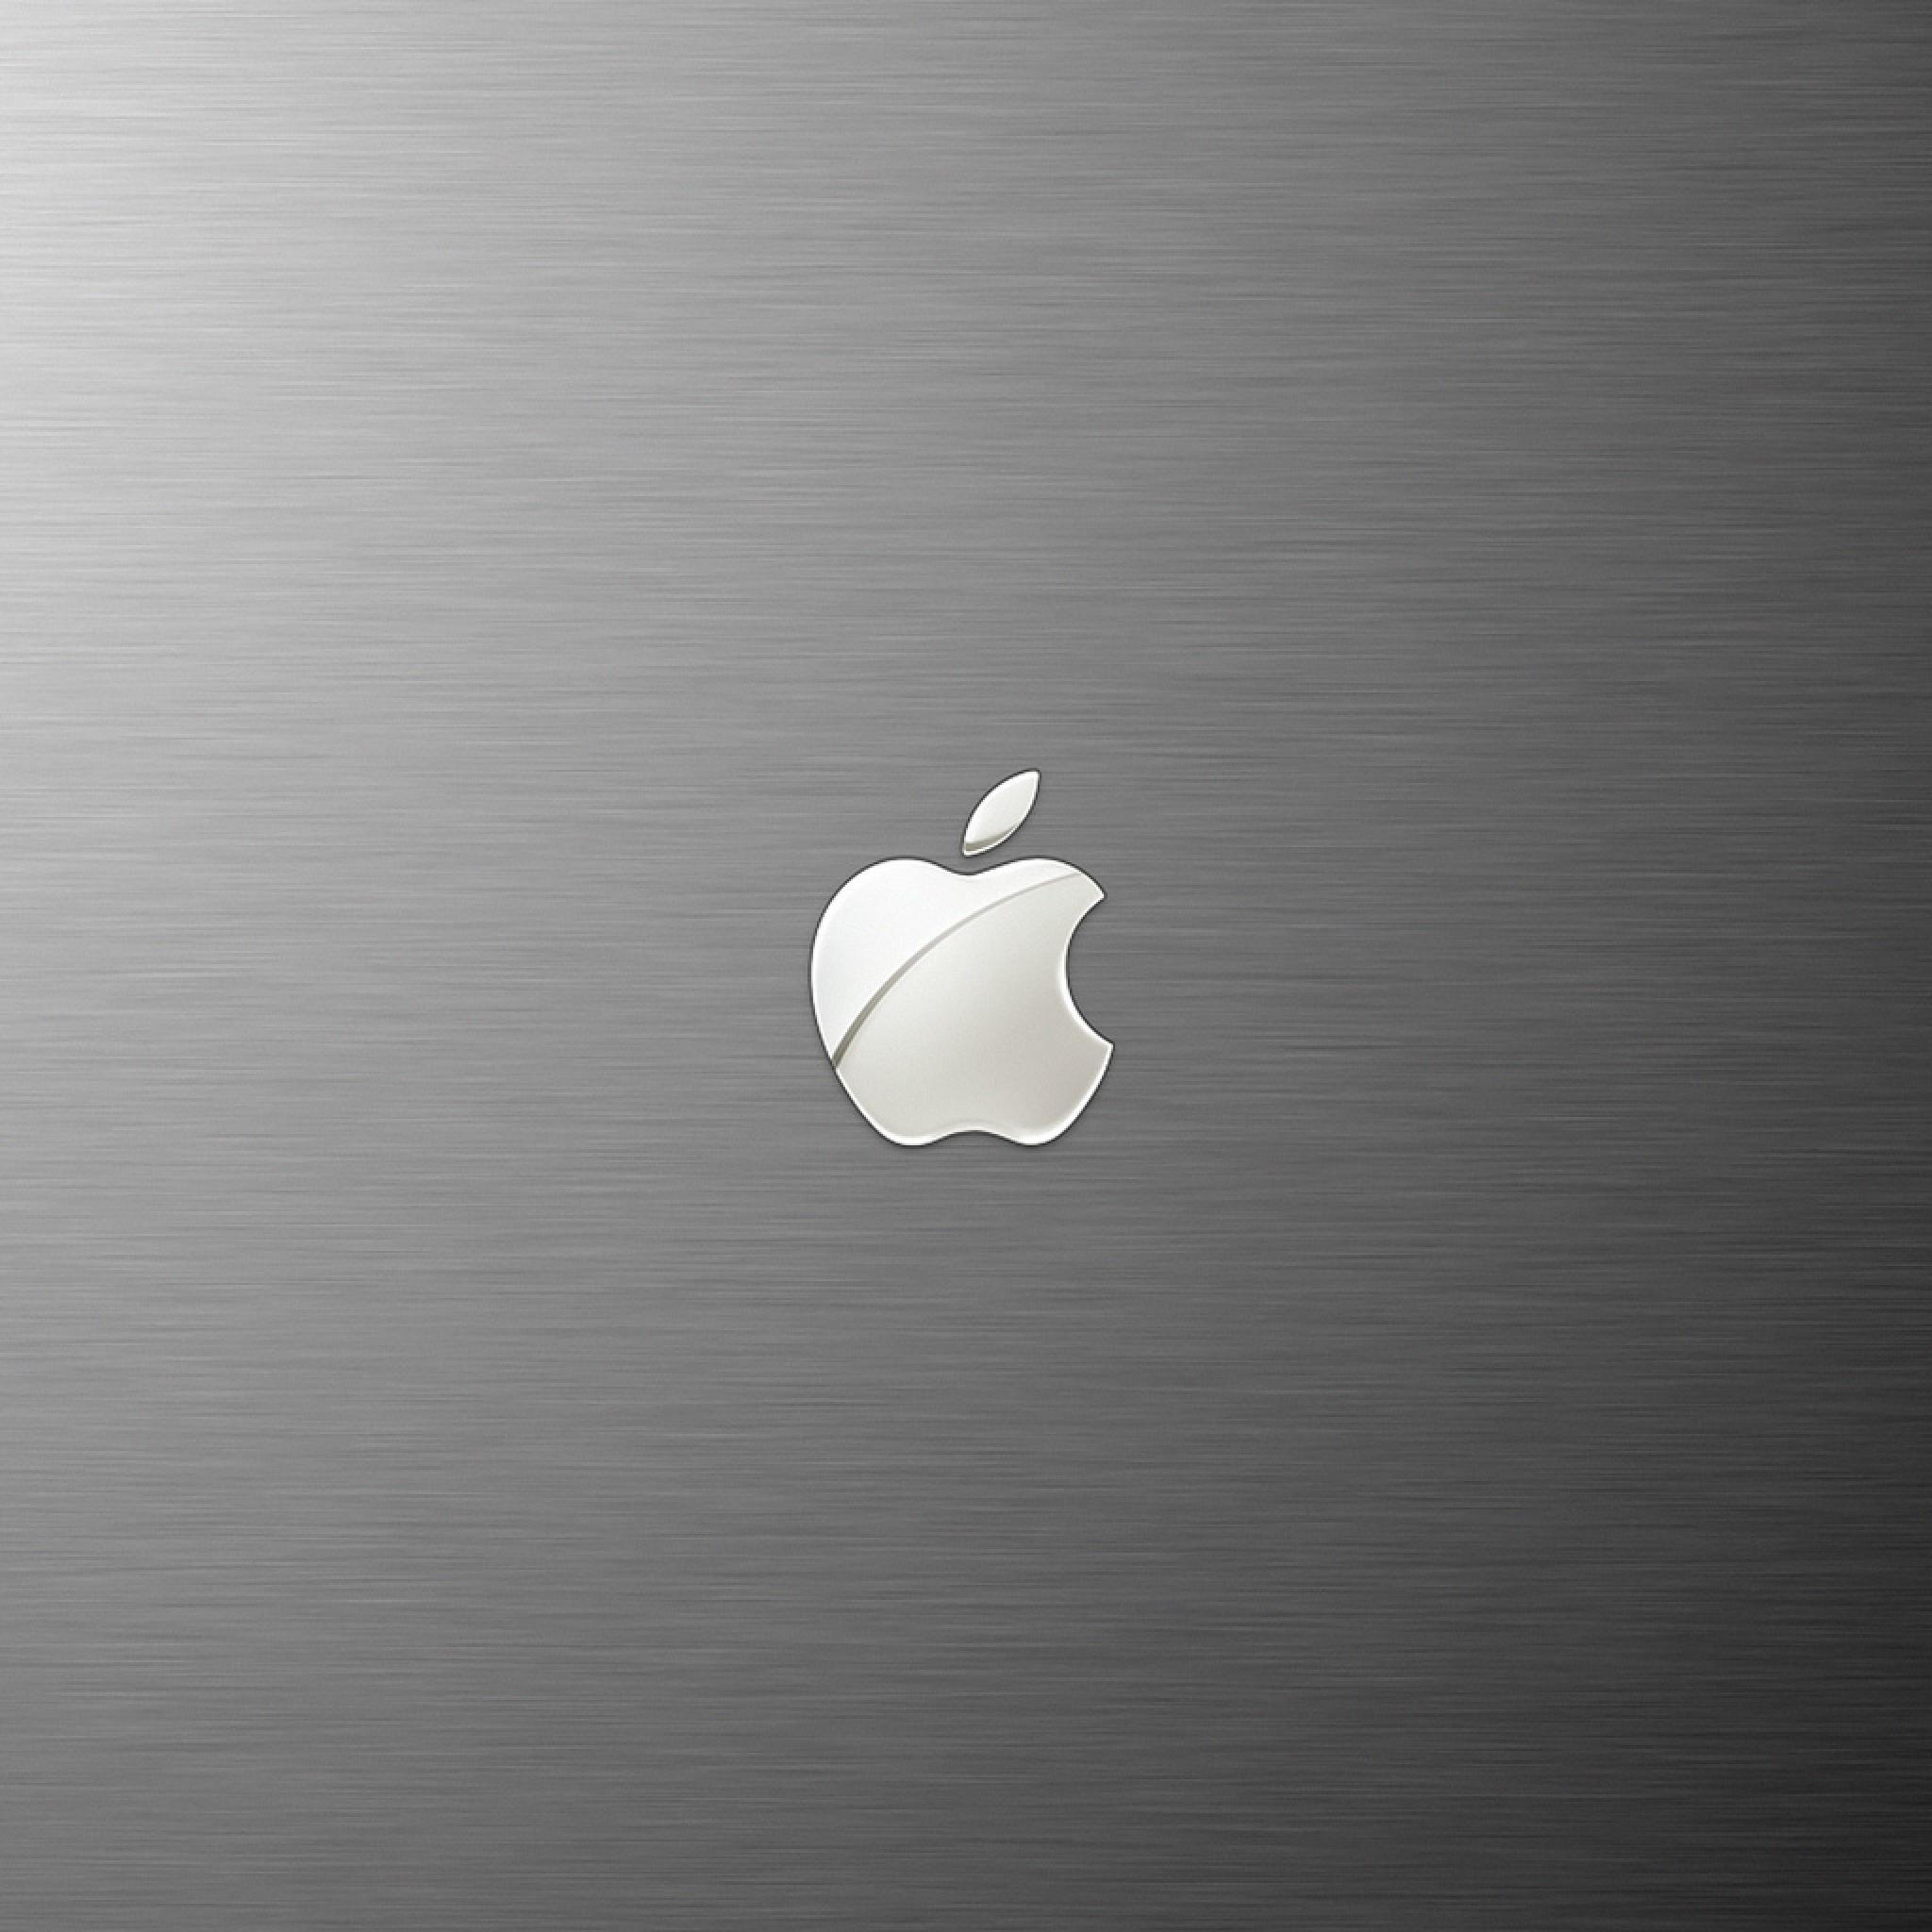 Apple алюминий цвета. Эпл яблоко айфон. Логотип Apple. Обои Apple. Значок айфона.